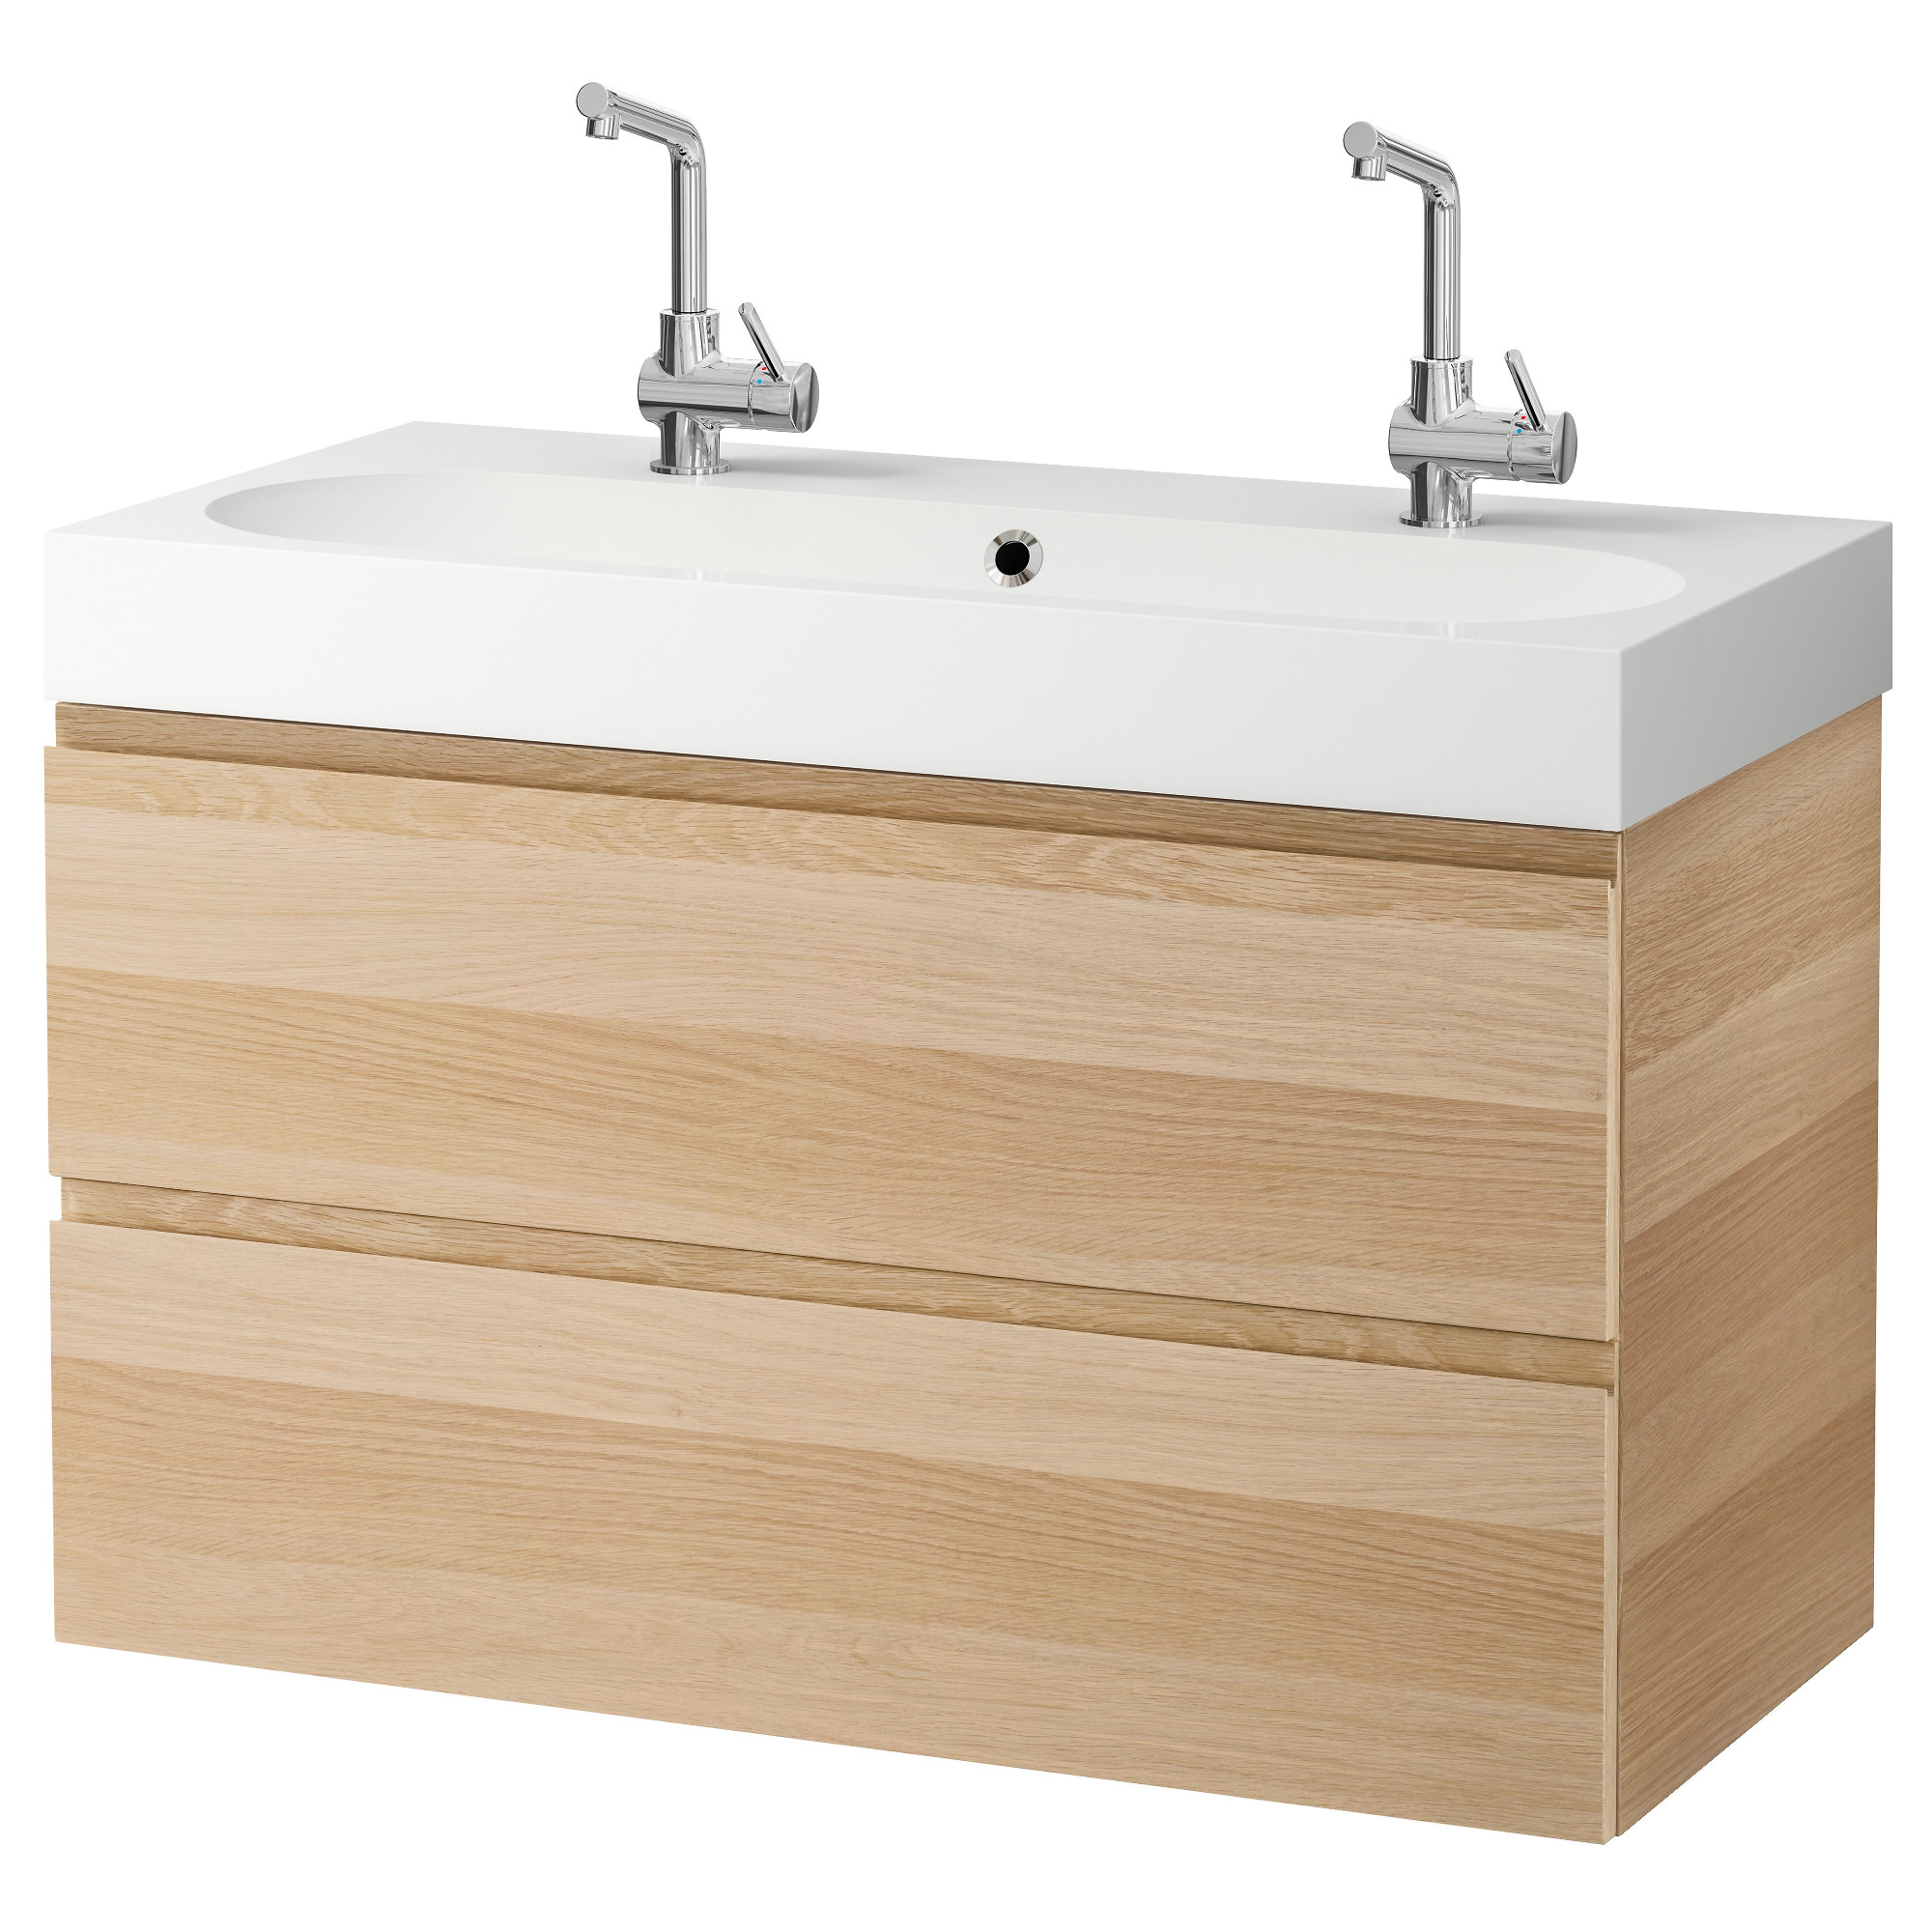 GODMORGON/BRÅVIKEN wash-stand with 2 drawers